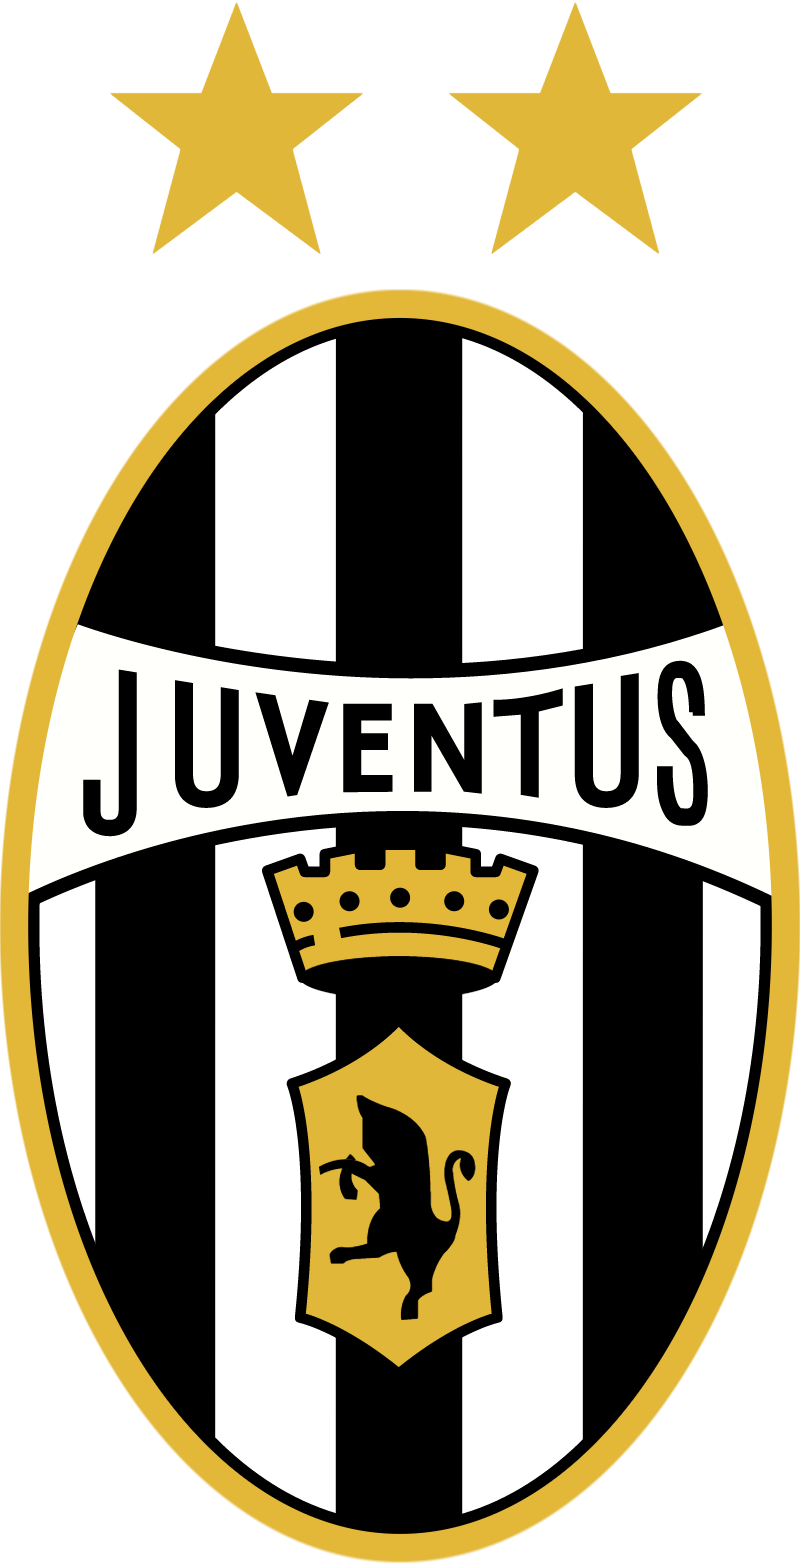 JUVENTUS vector logo